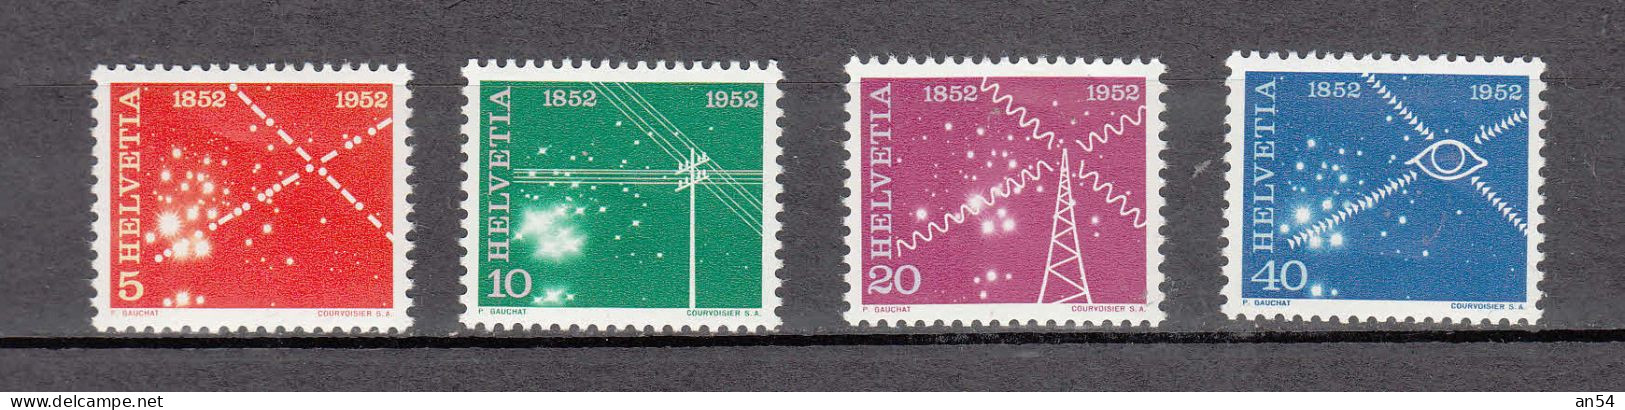 1952  N° 309 à 312  NEUFS**   COTE 8.00         CATALOGUE SBK - Unused Stamps